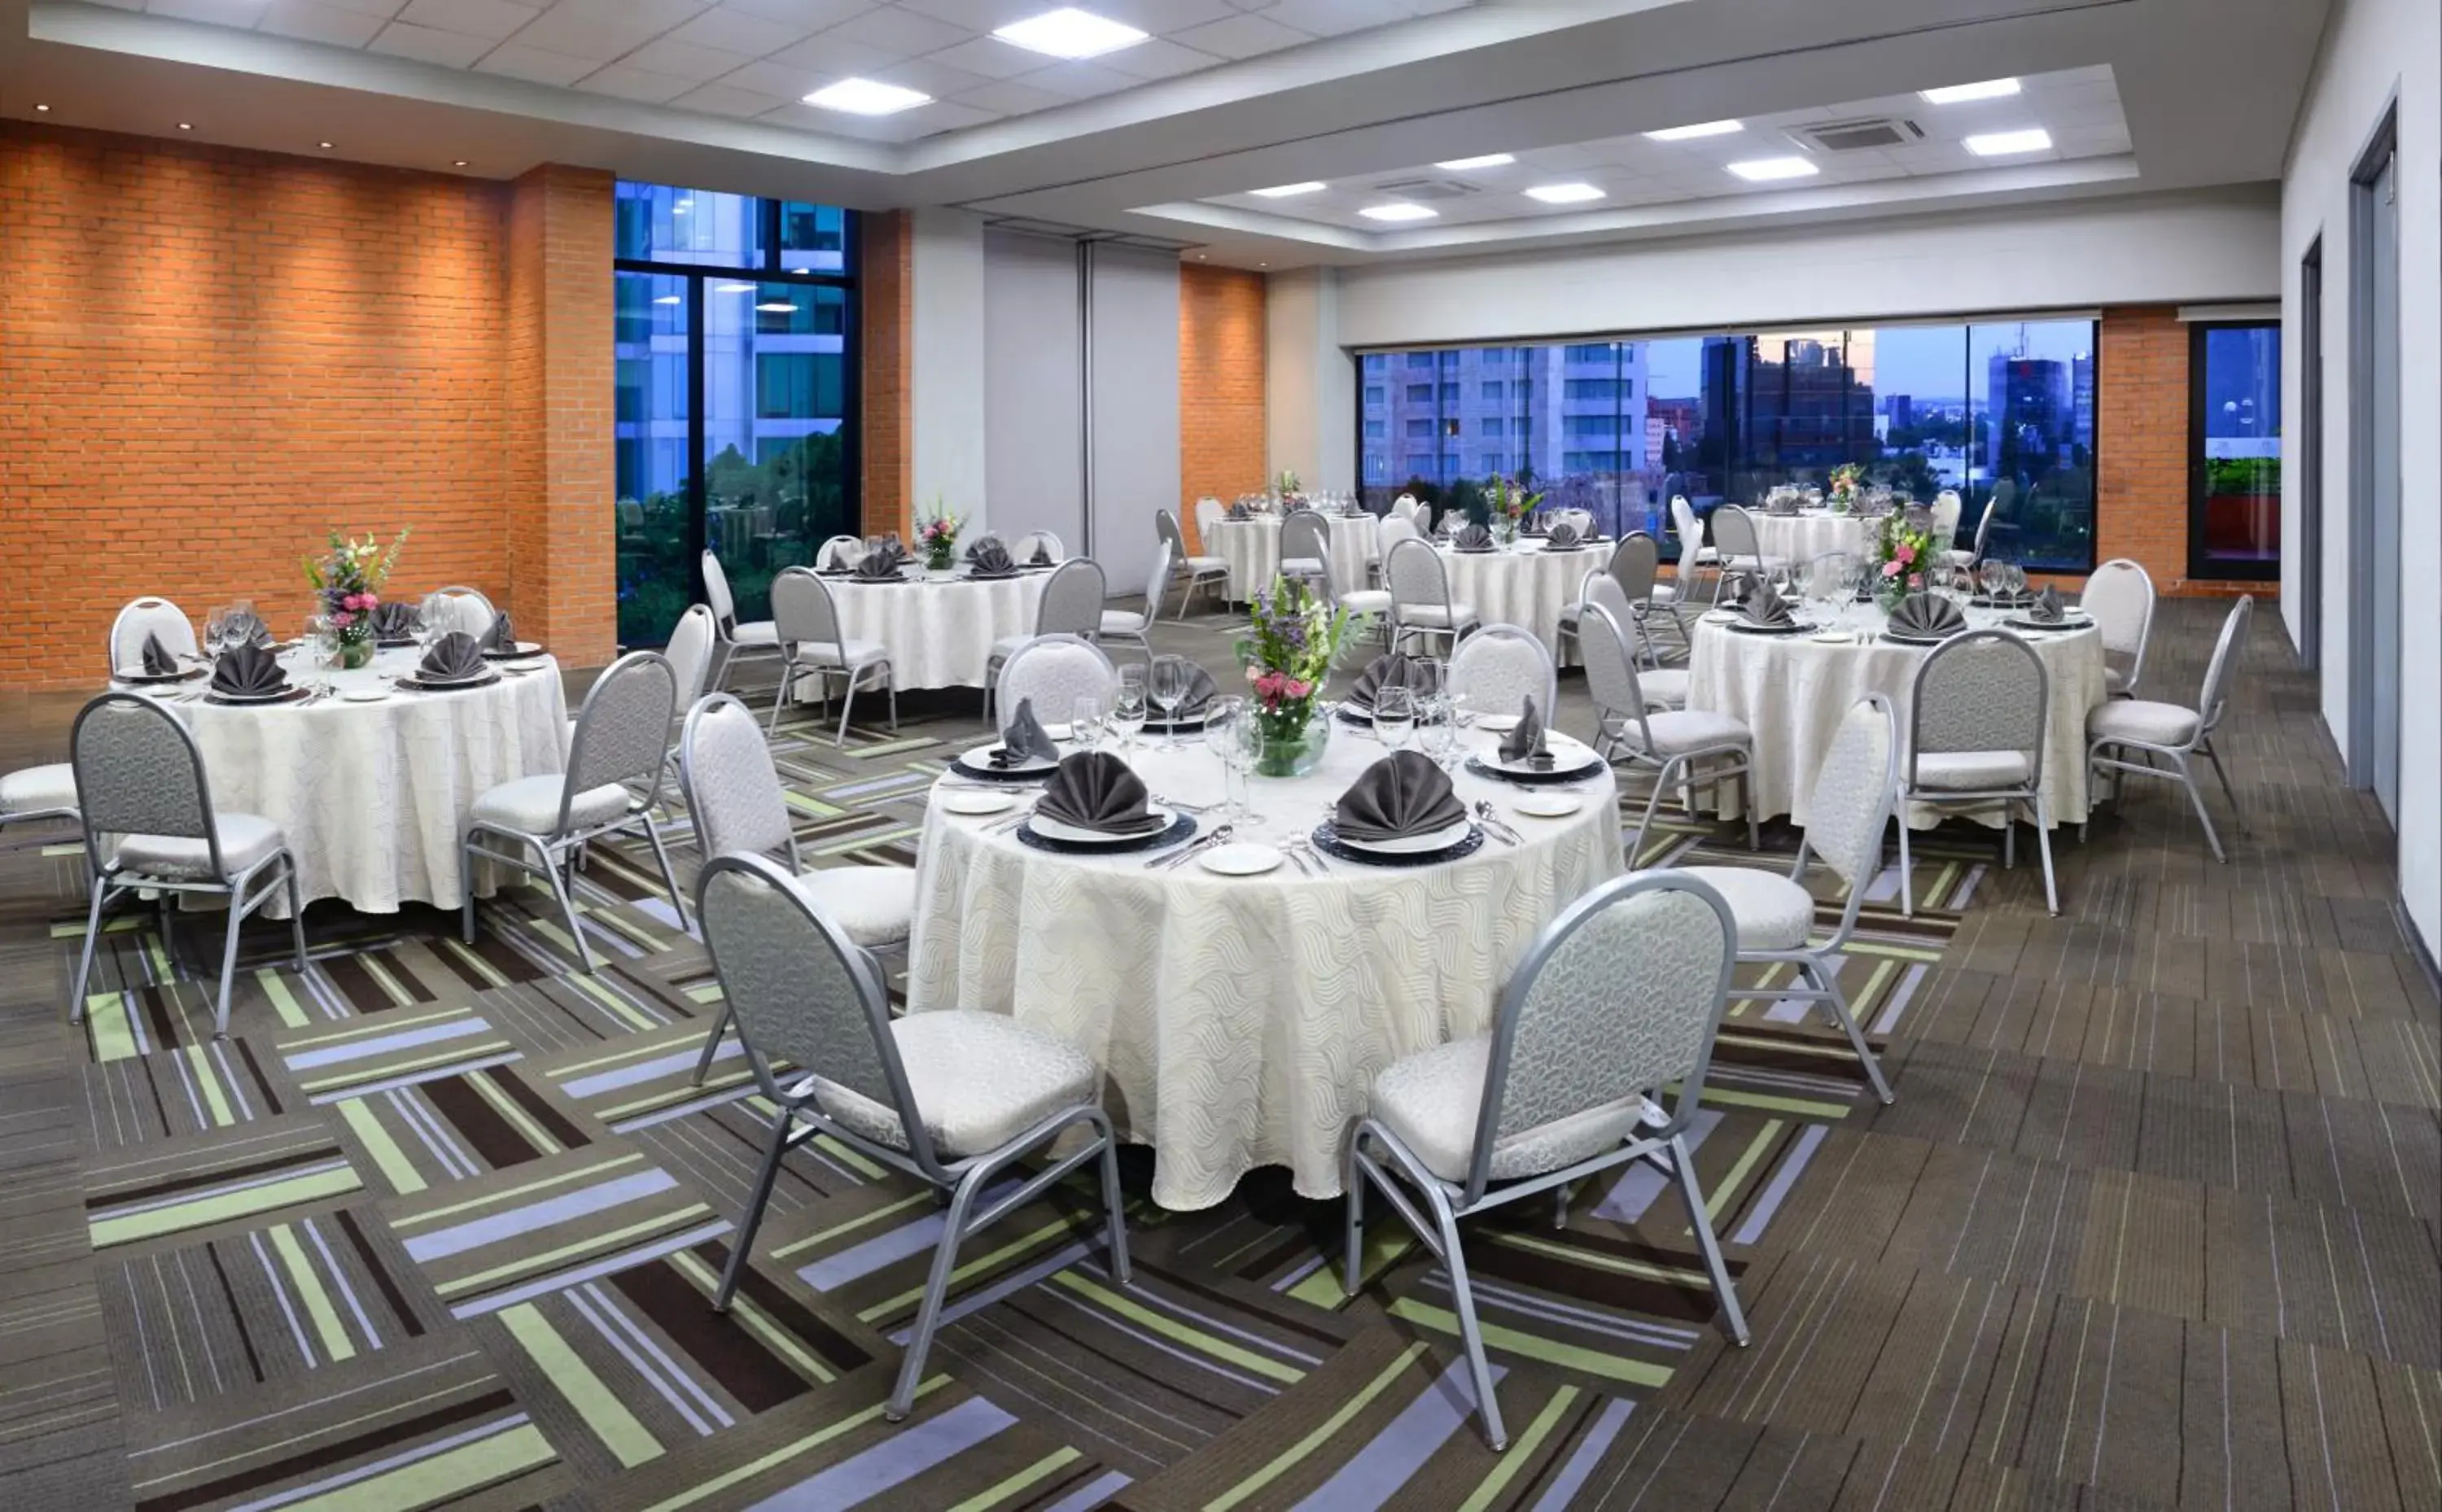 Banquet/Function facilities, Banquet Facilities in HS HOTSSON Hotel Guadalajara Country Club